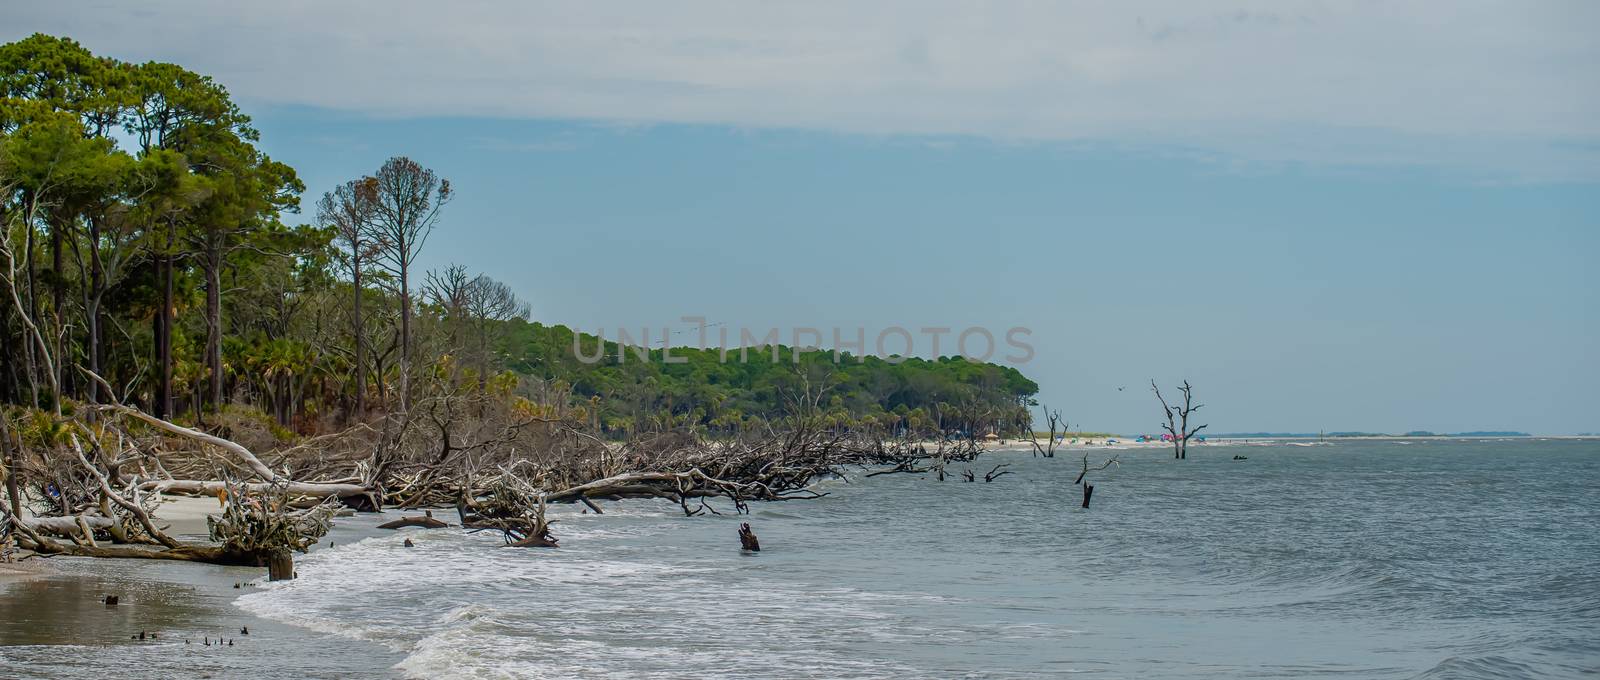 palmetto forest on hunting island beach by digidreamgrafix